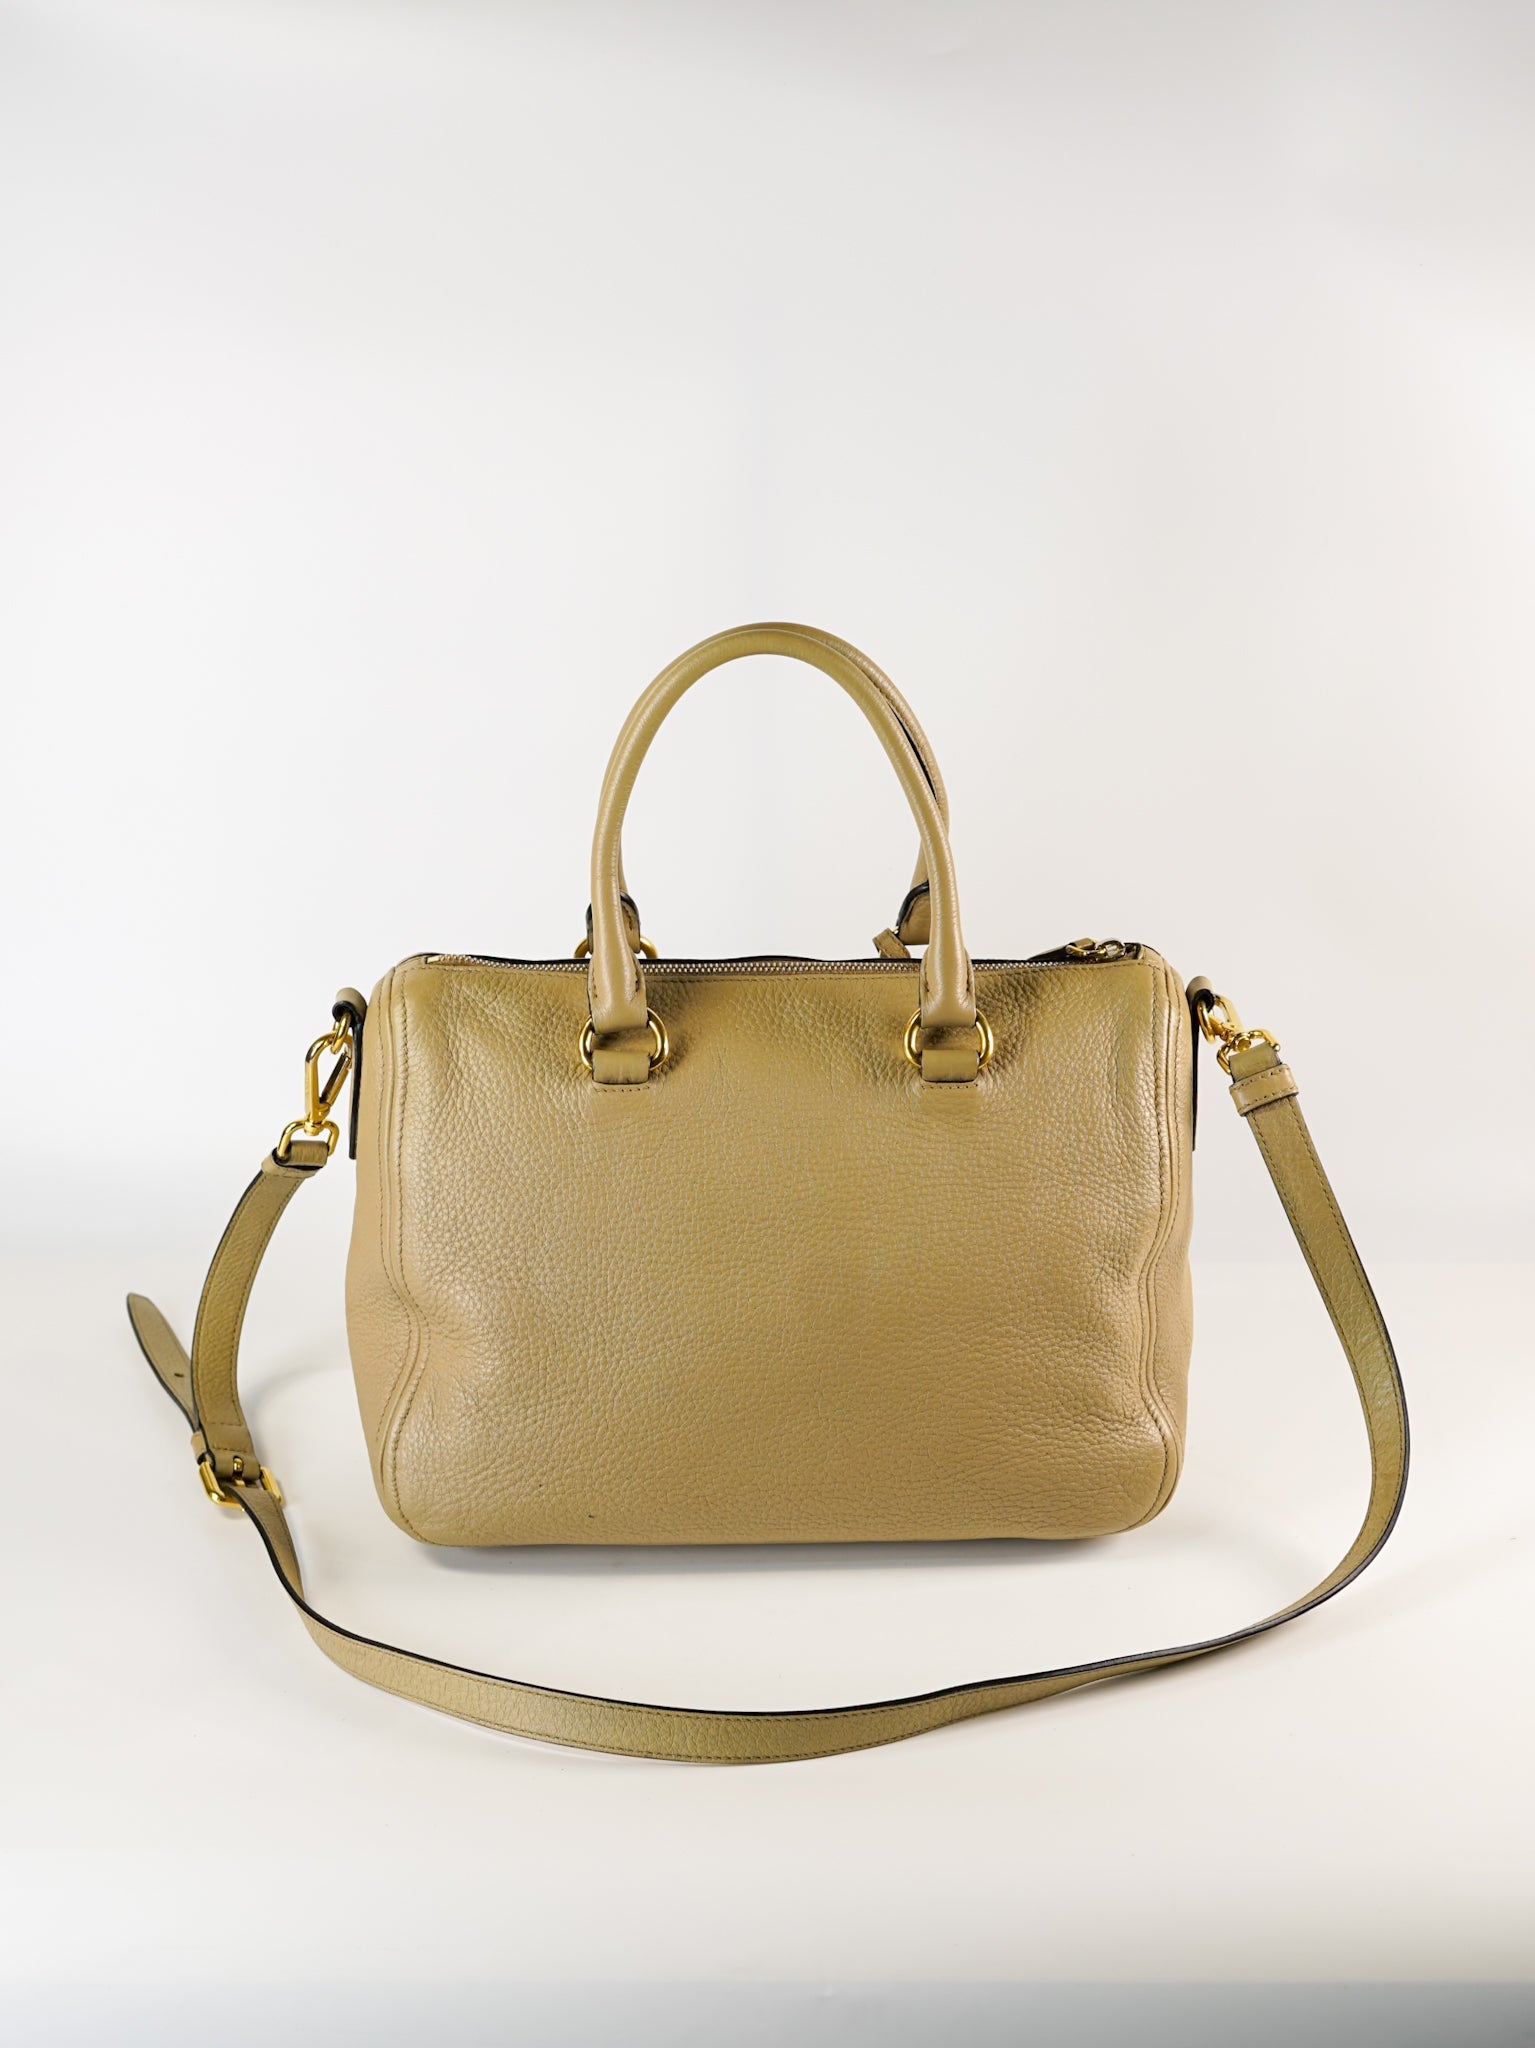 Argilla Vitello Phenix Leather Bauletto Bag in Gold Hardware | Purse Maison Luxury Bags Shop